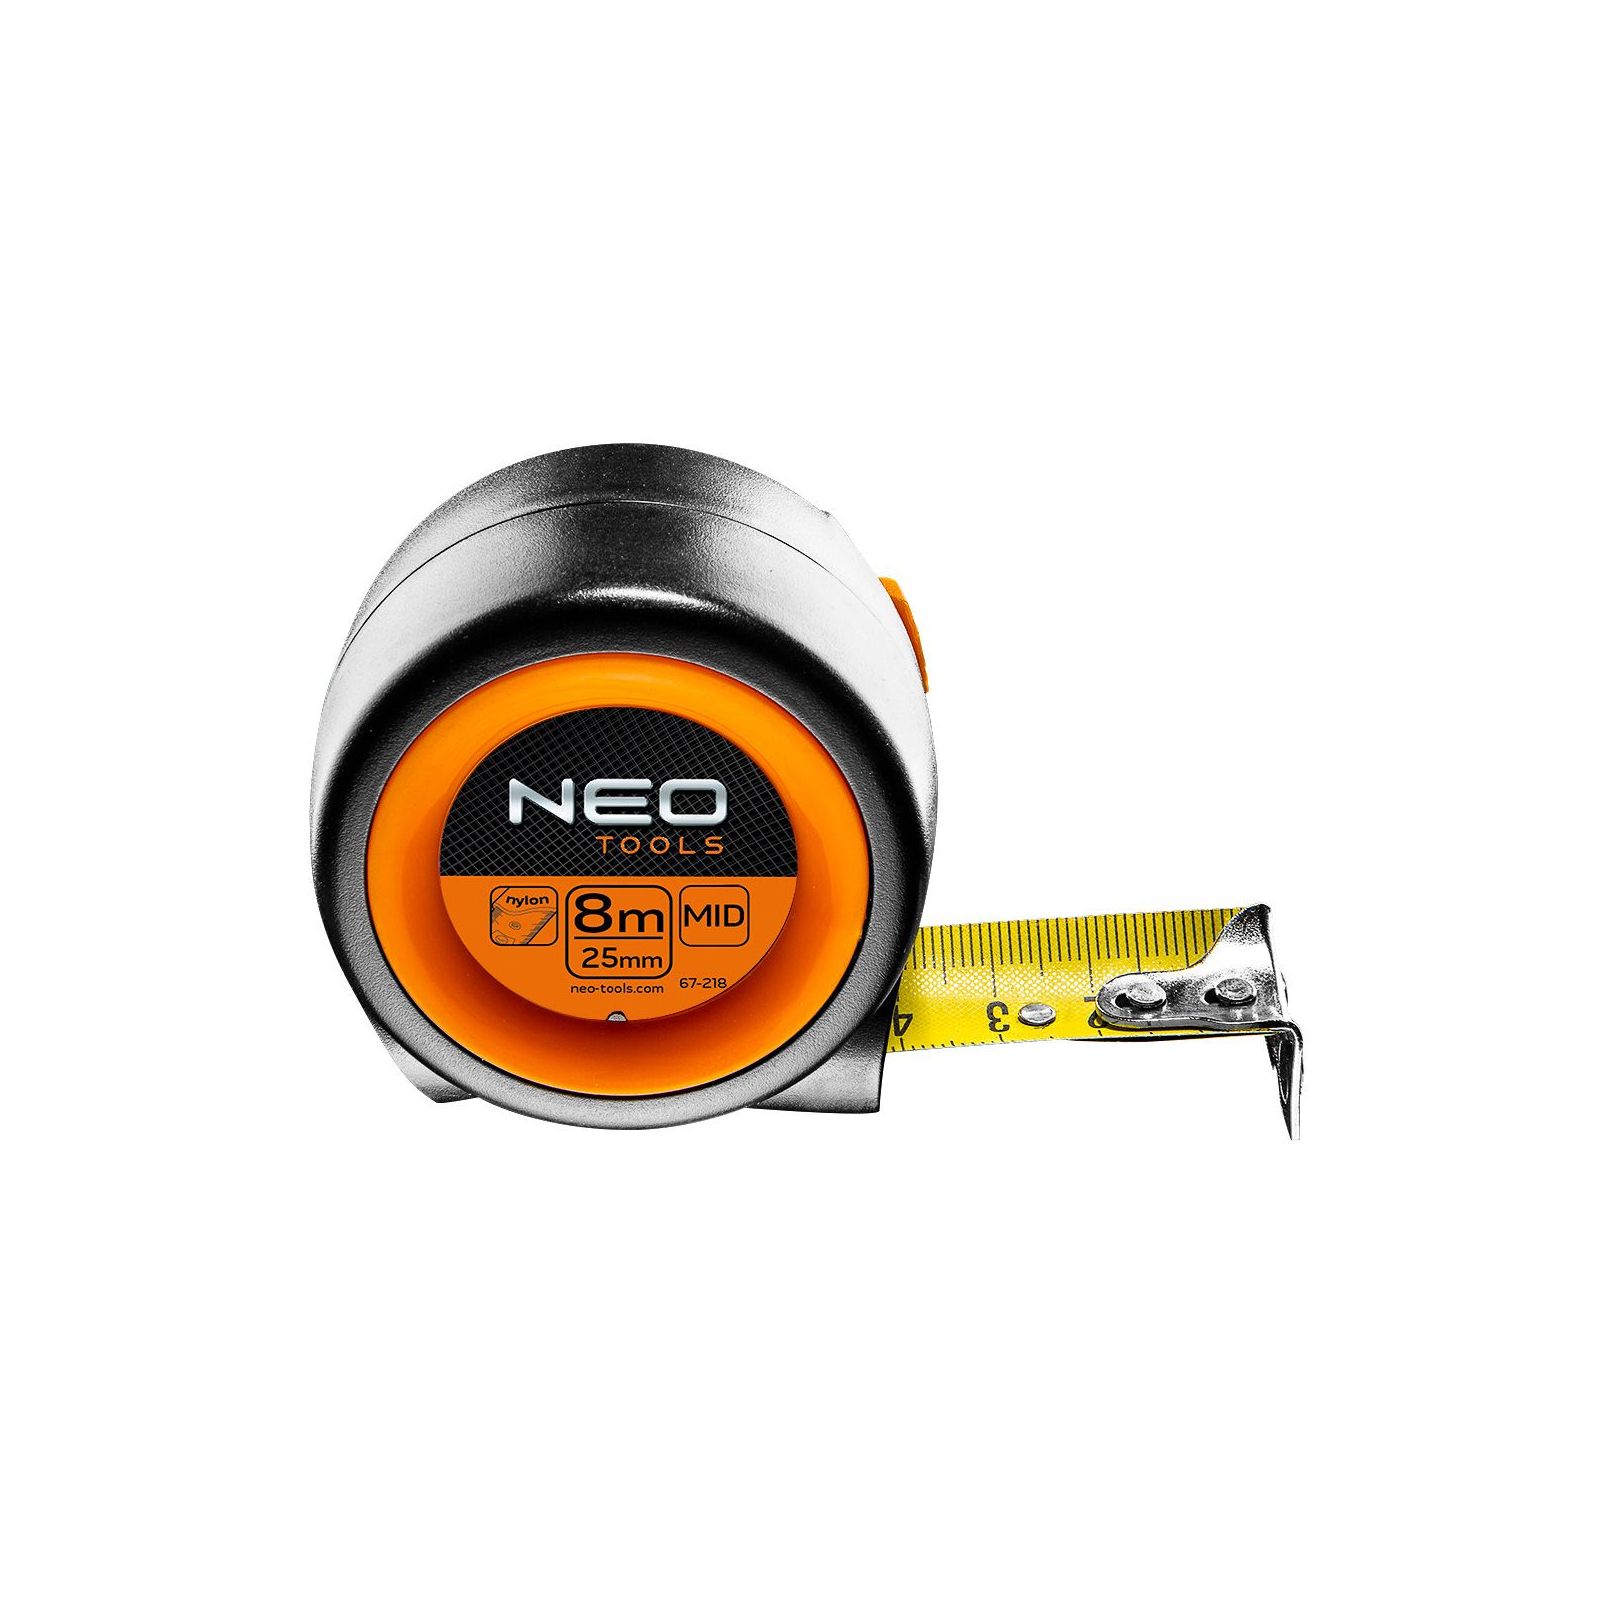 Рулетка Neo Tools компактная, стальная лента, 8 м x 25 мм, с фиксатором selflo (67-218)